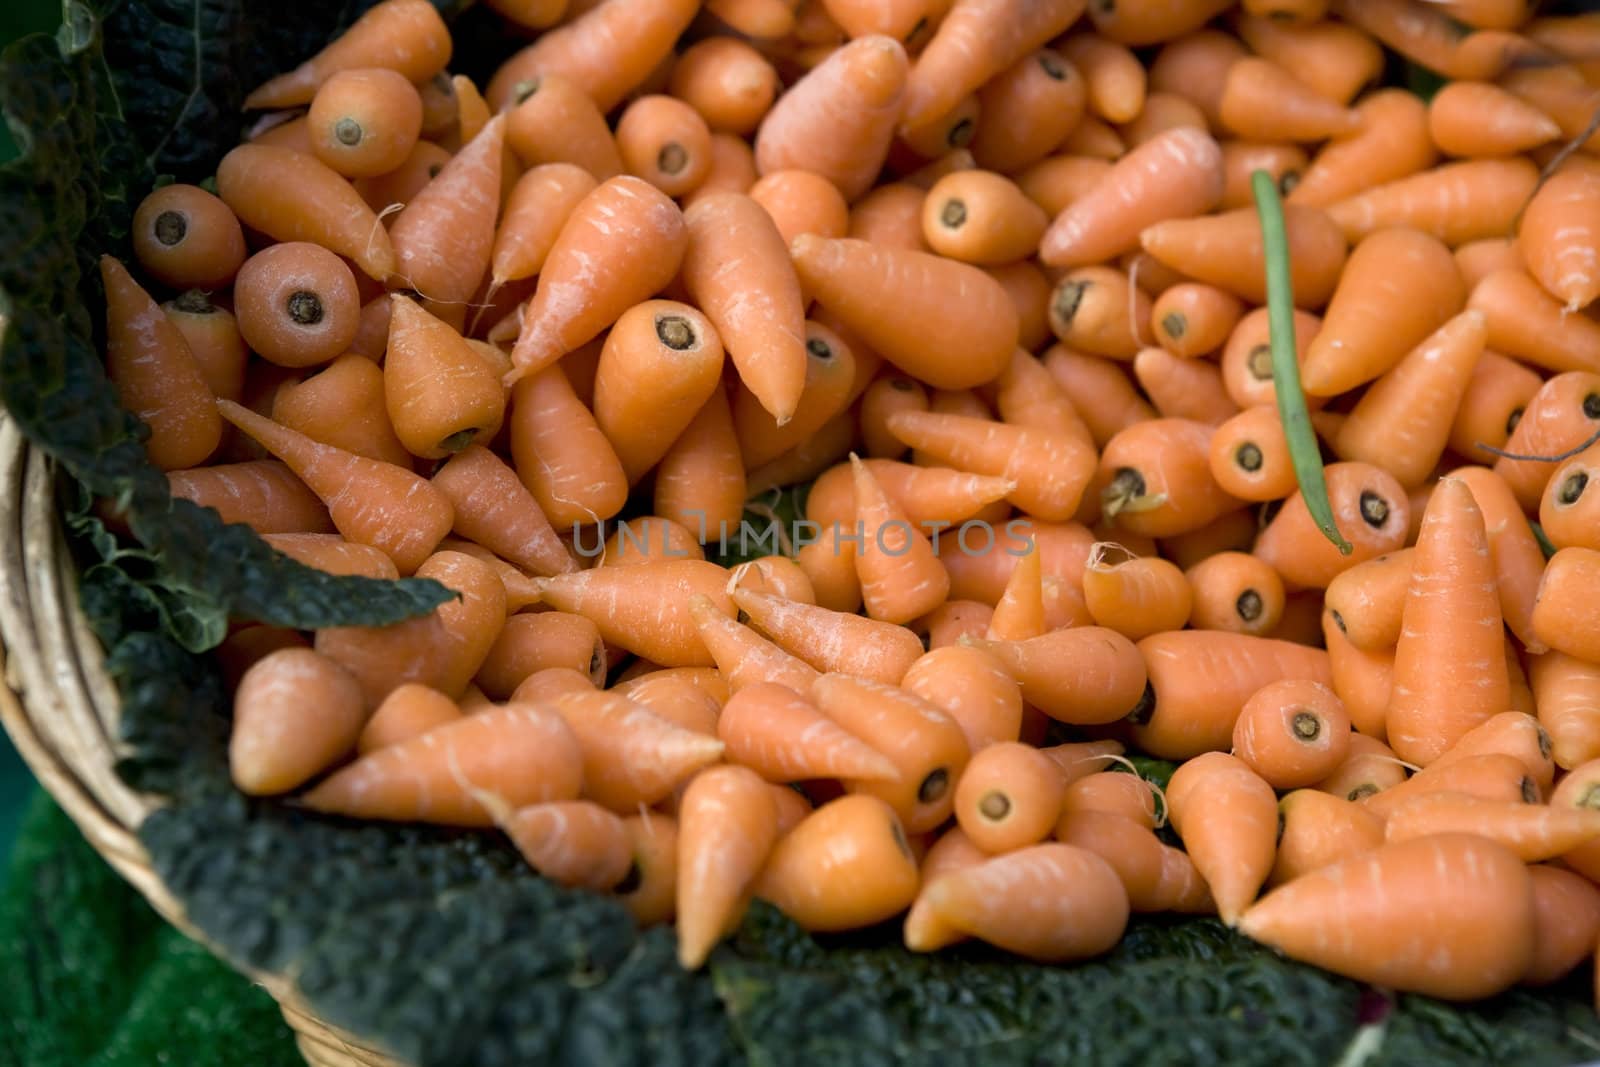 carrot. Food market